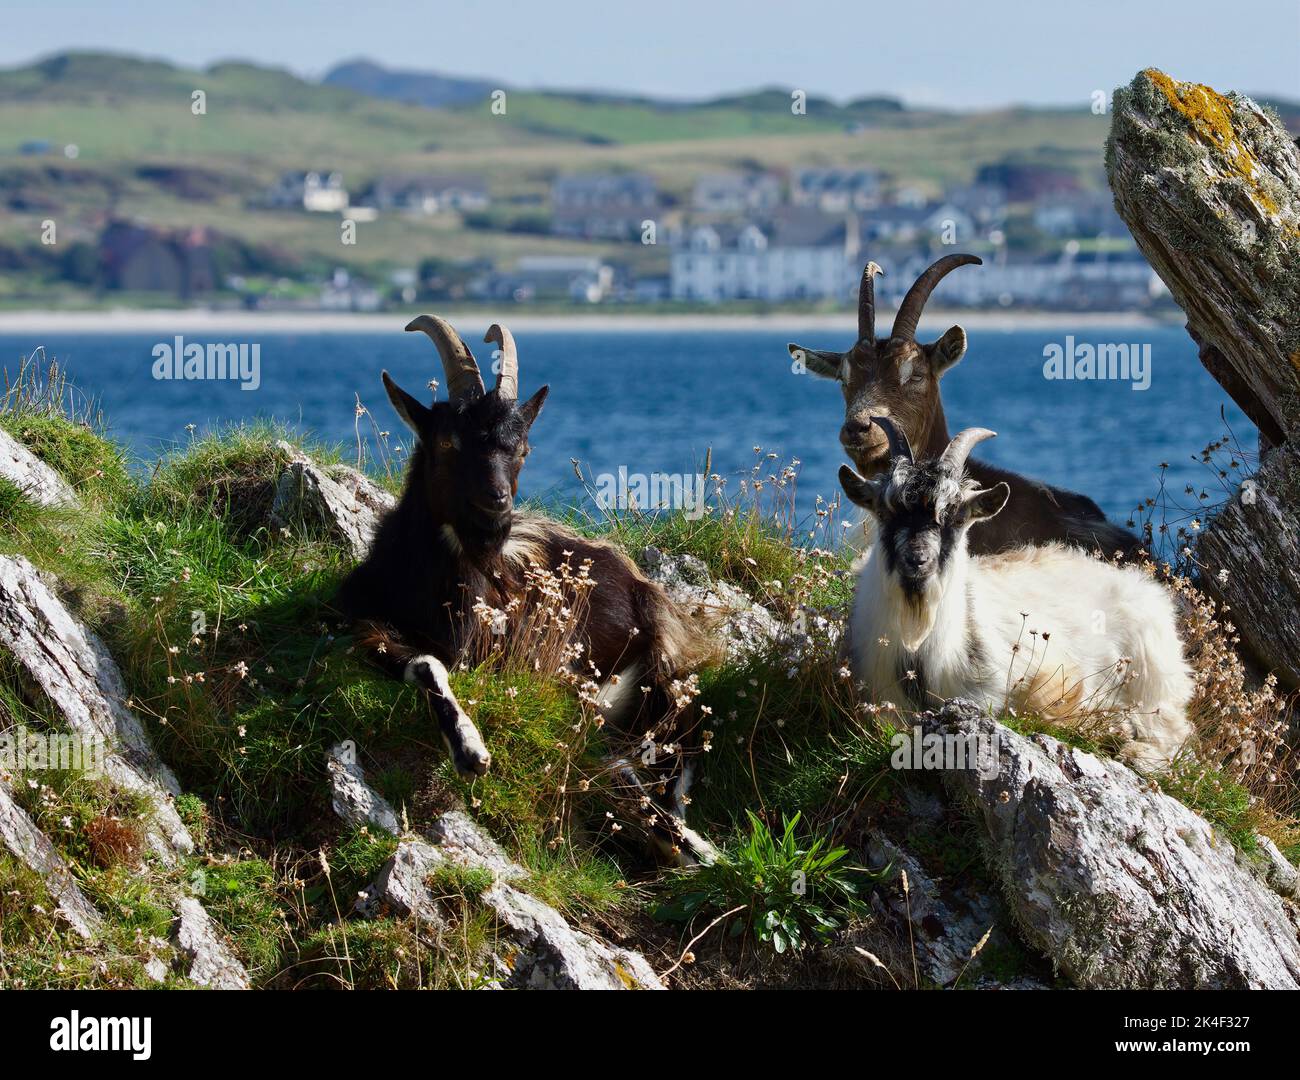 Wild Goats with Port Ellen in the Background, near Kilnaughton Bay, Oa Peninsula, Island of Islay Stock Photo